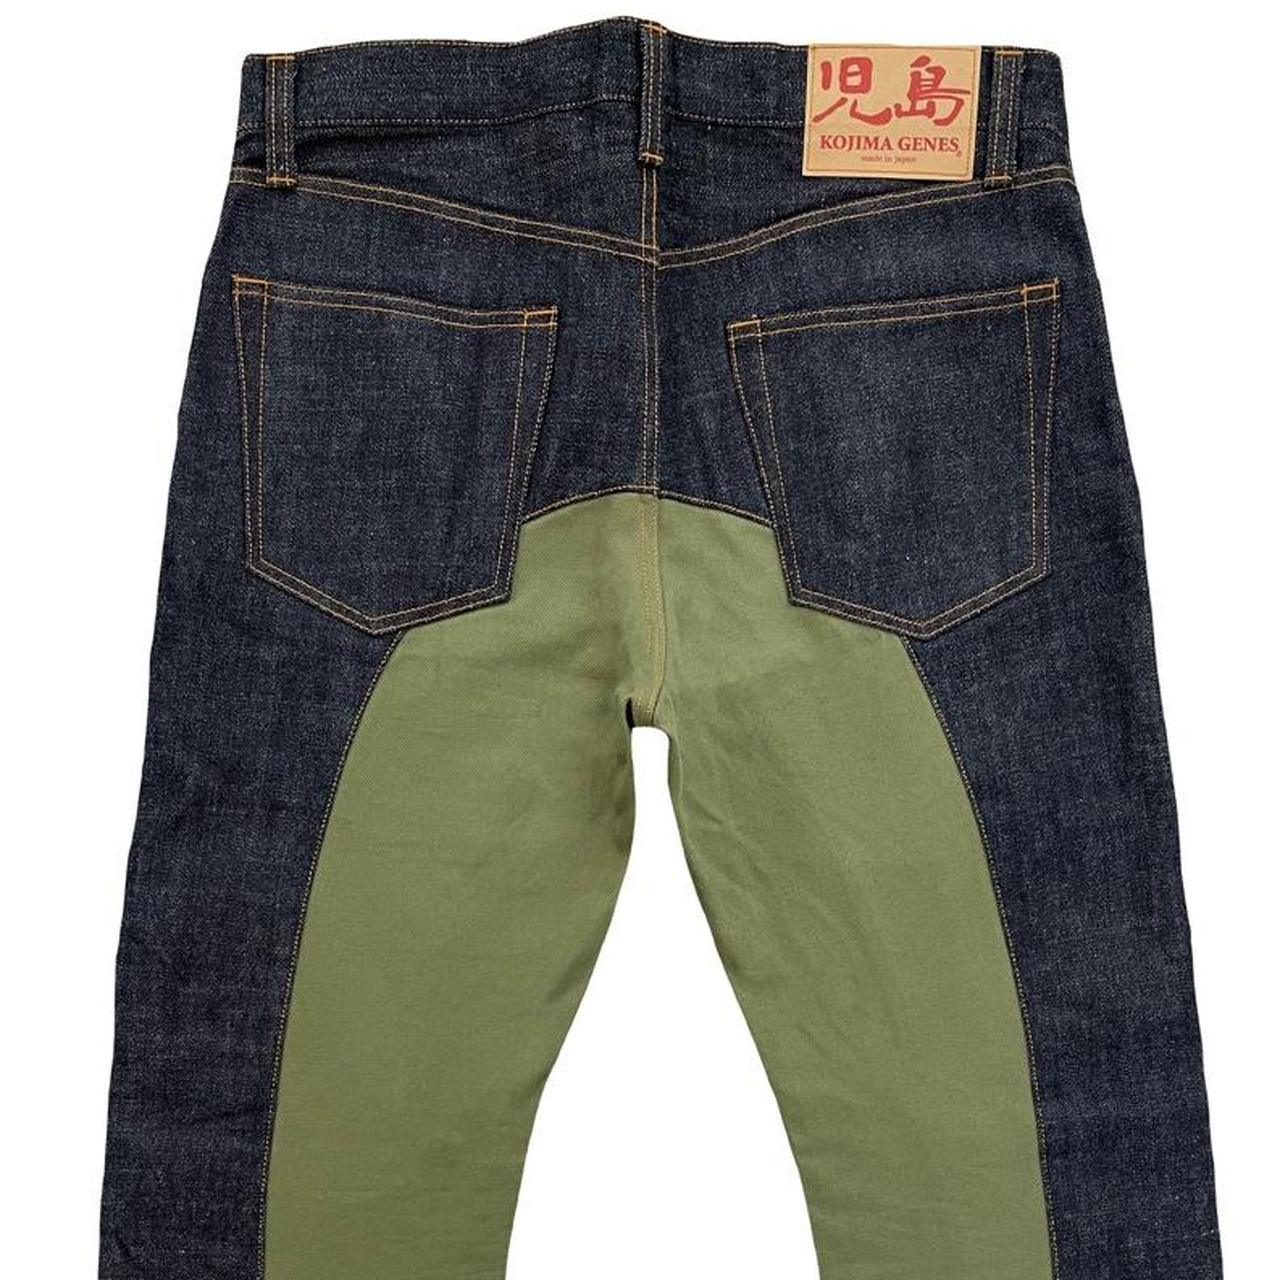 Kojima Jeans - Known Source